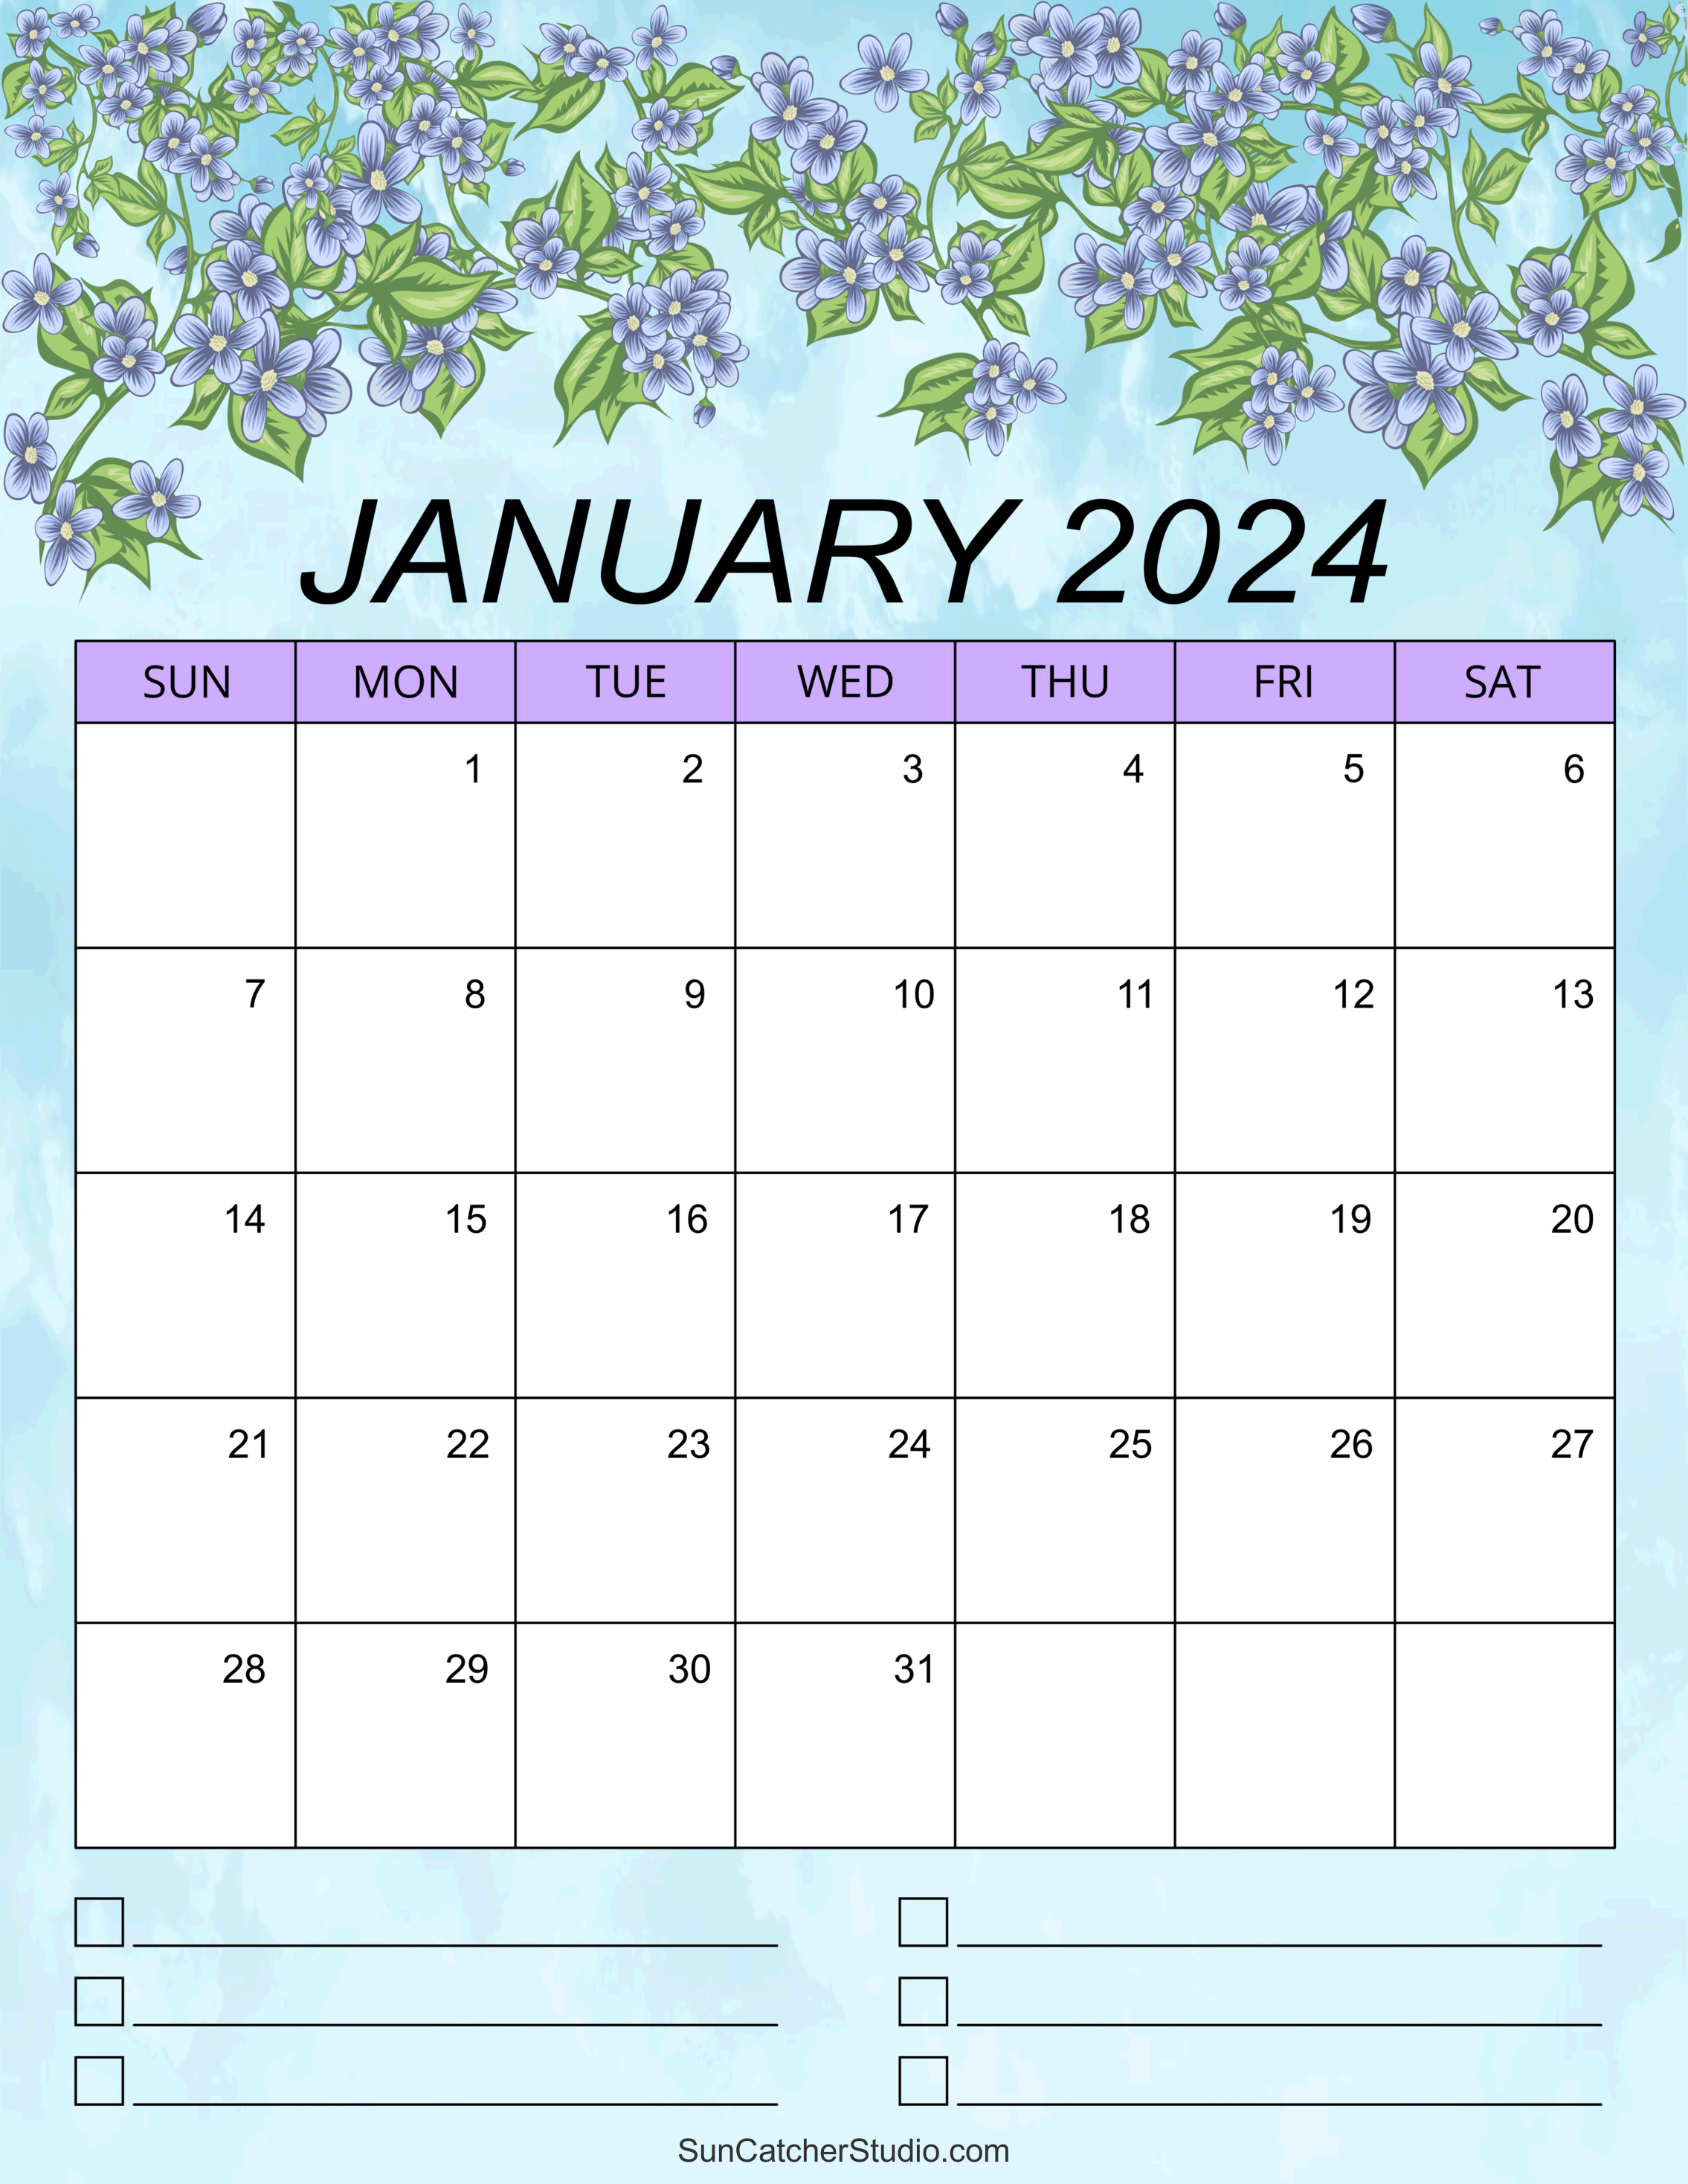 January 2024 Calendar (Free Printable) – Diy Projects, Patterns throughout Free Printable Calendar 2024 January Purple